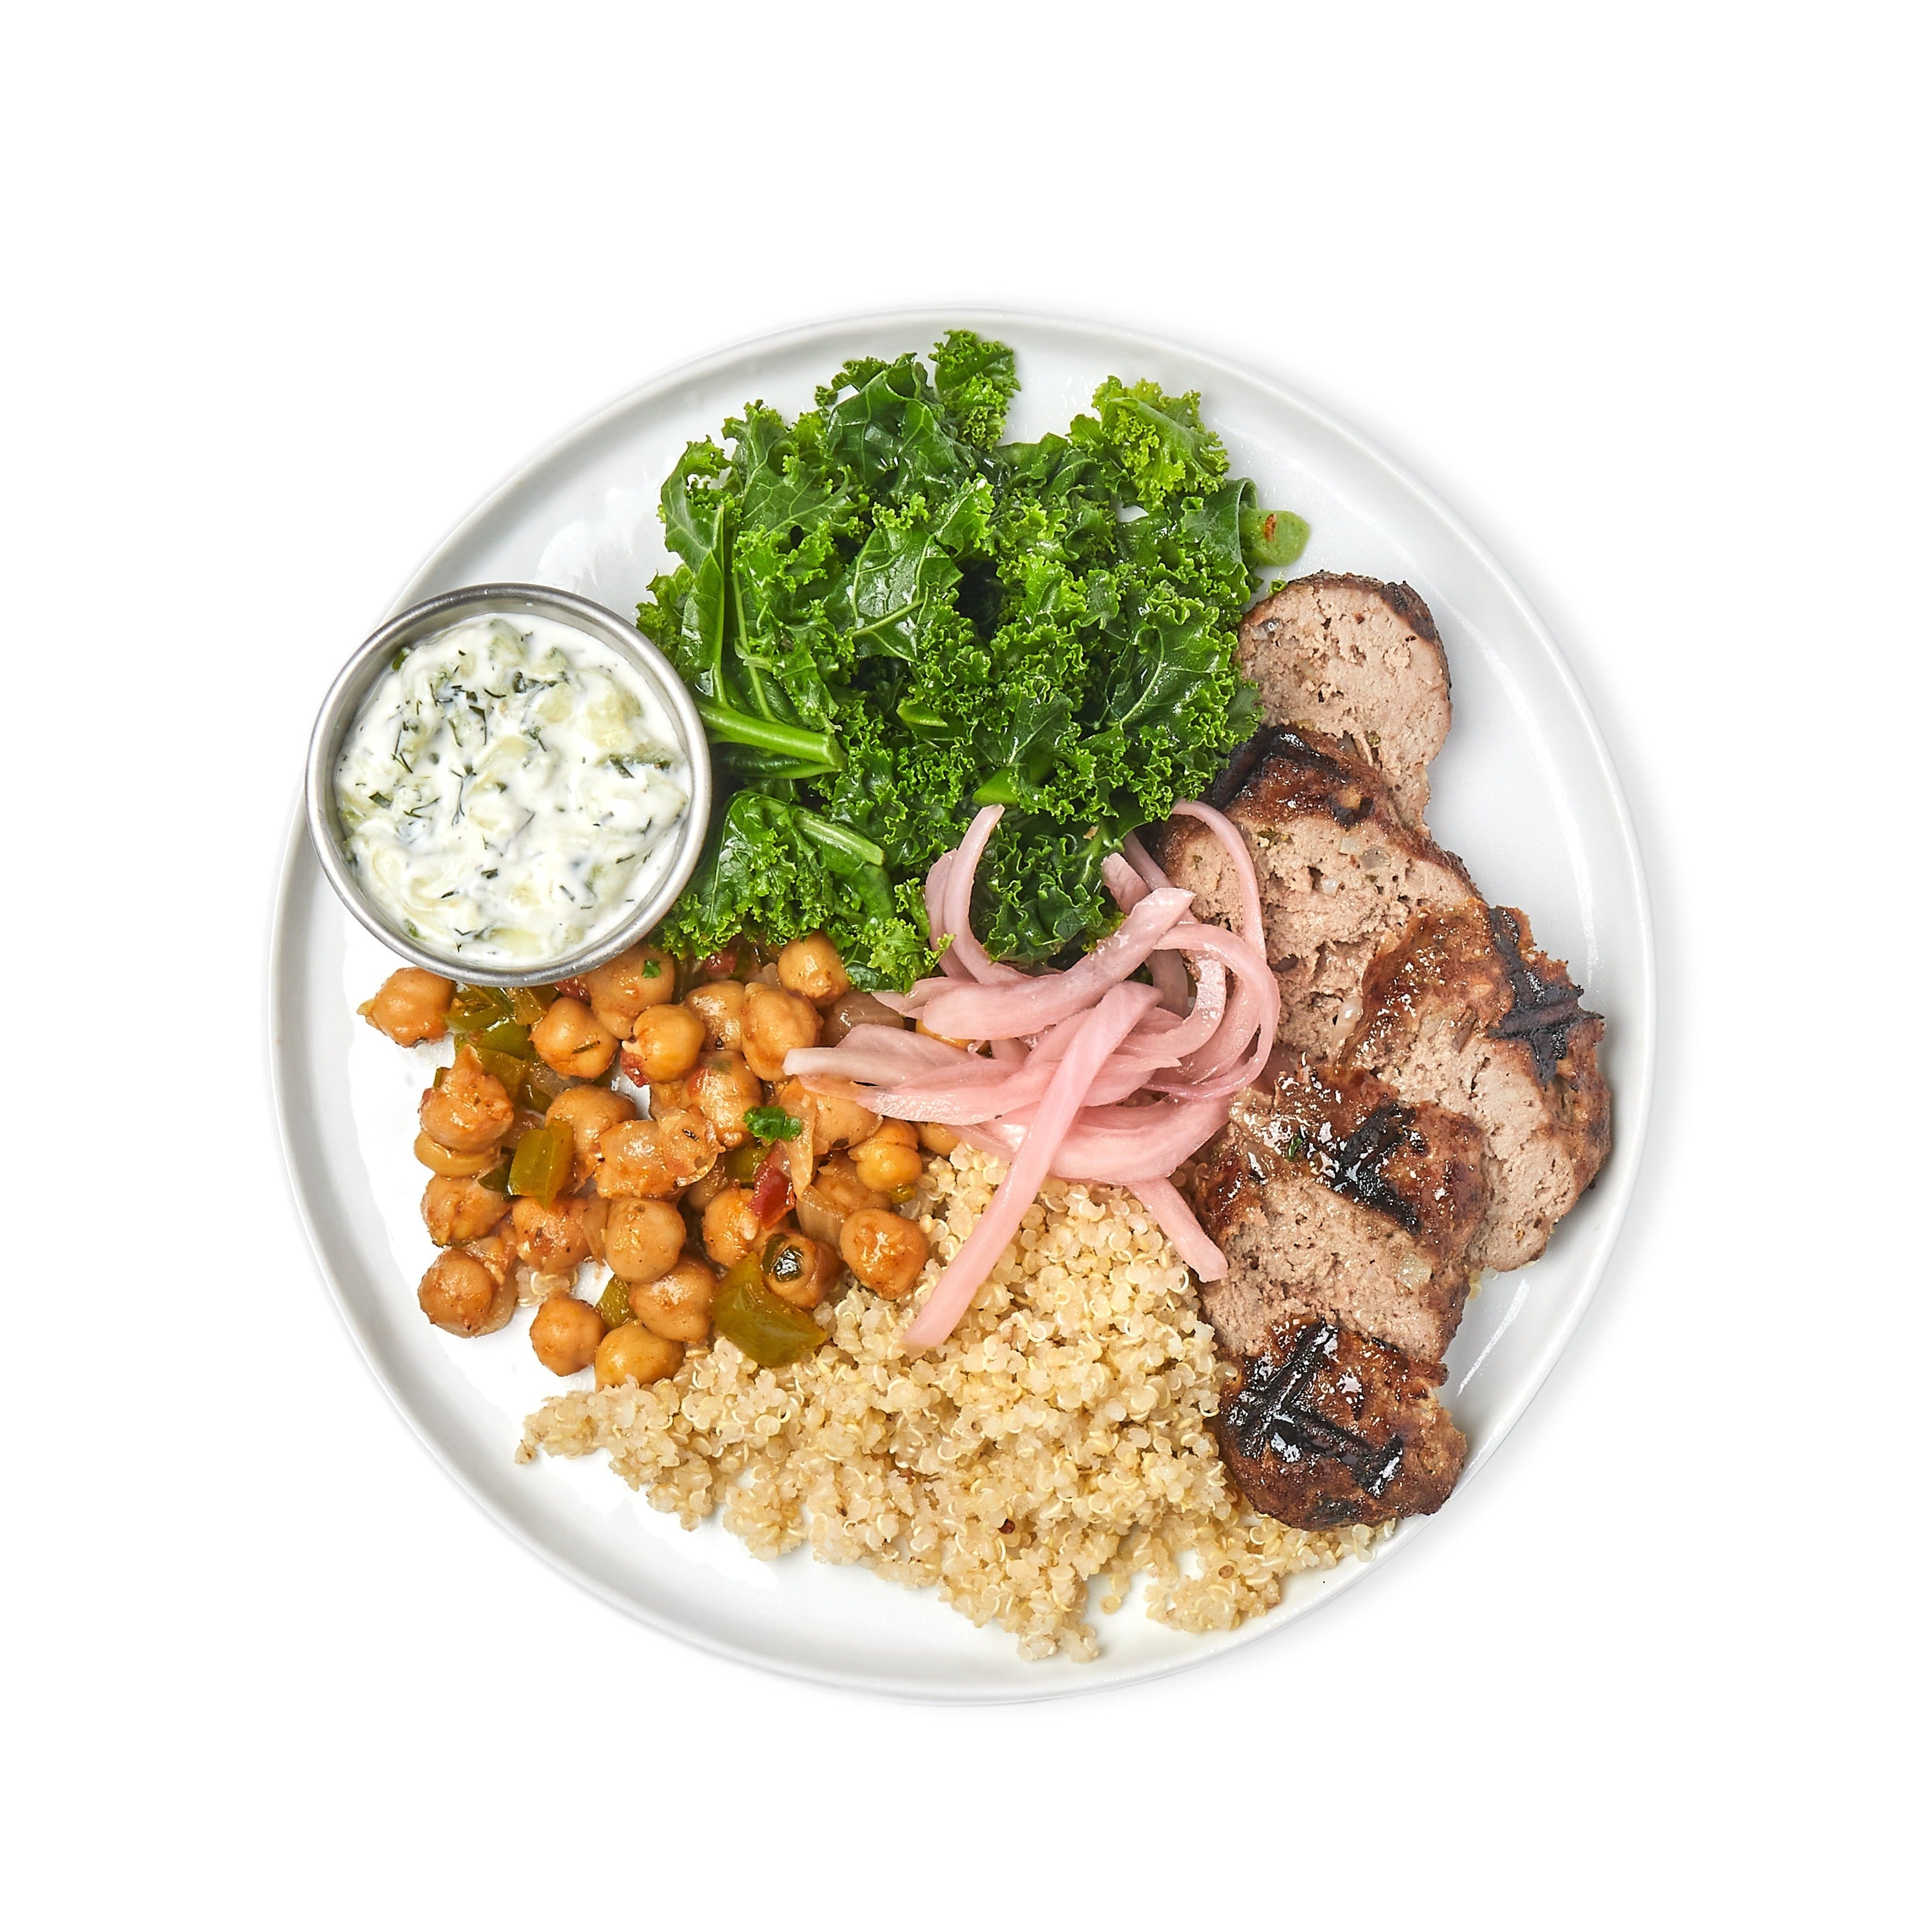 lamb gyro kebab bowl azuluna foods Premium Pasture-Raised Meals Delivery